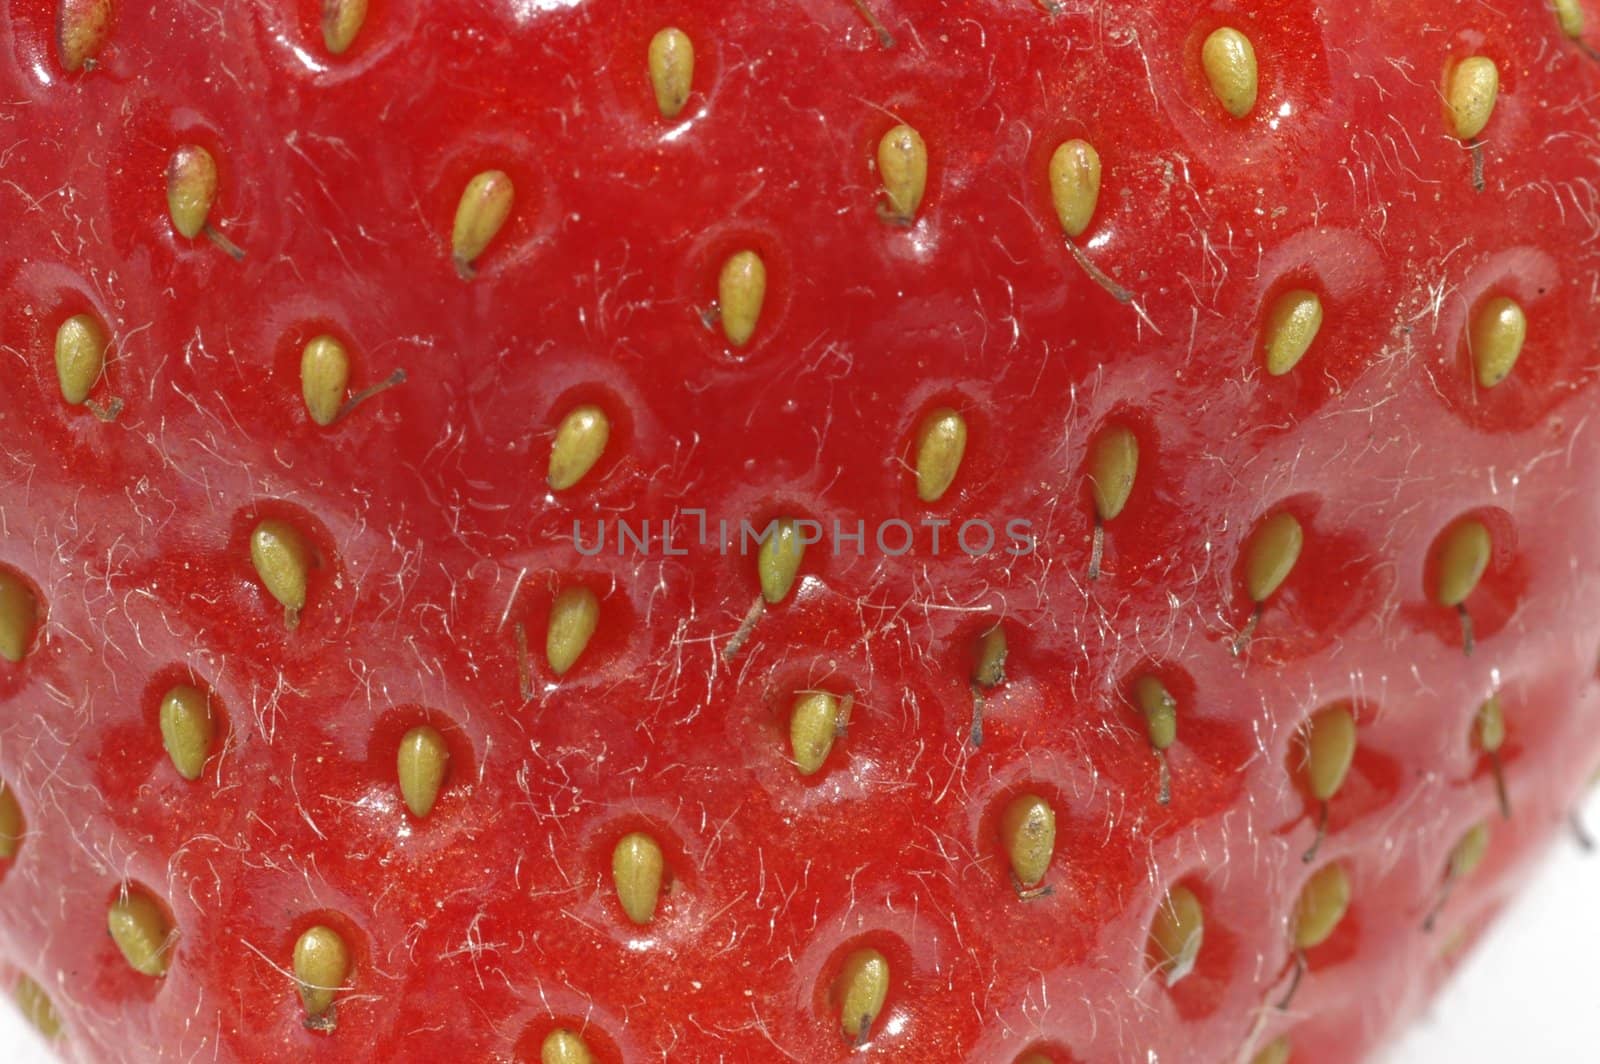 A close up of a fresh strawberry